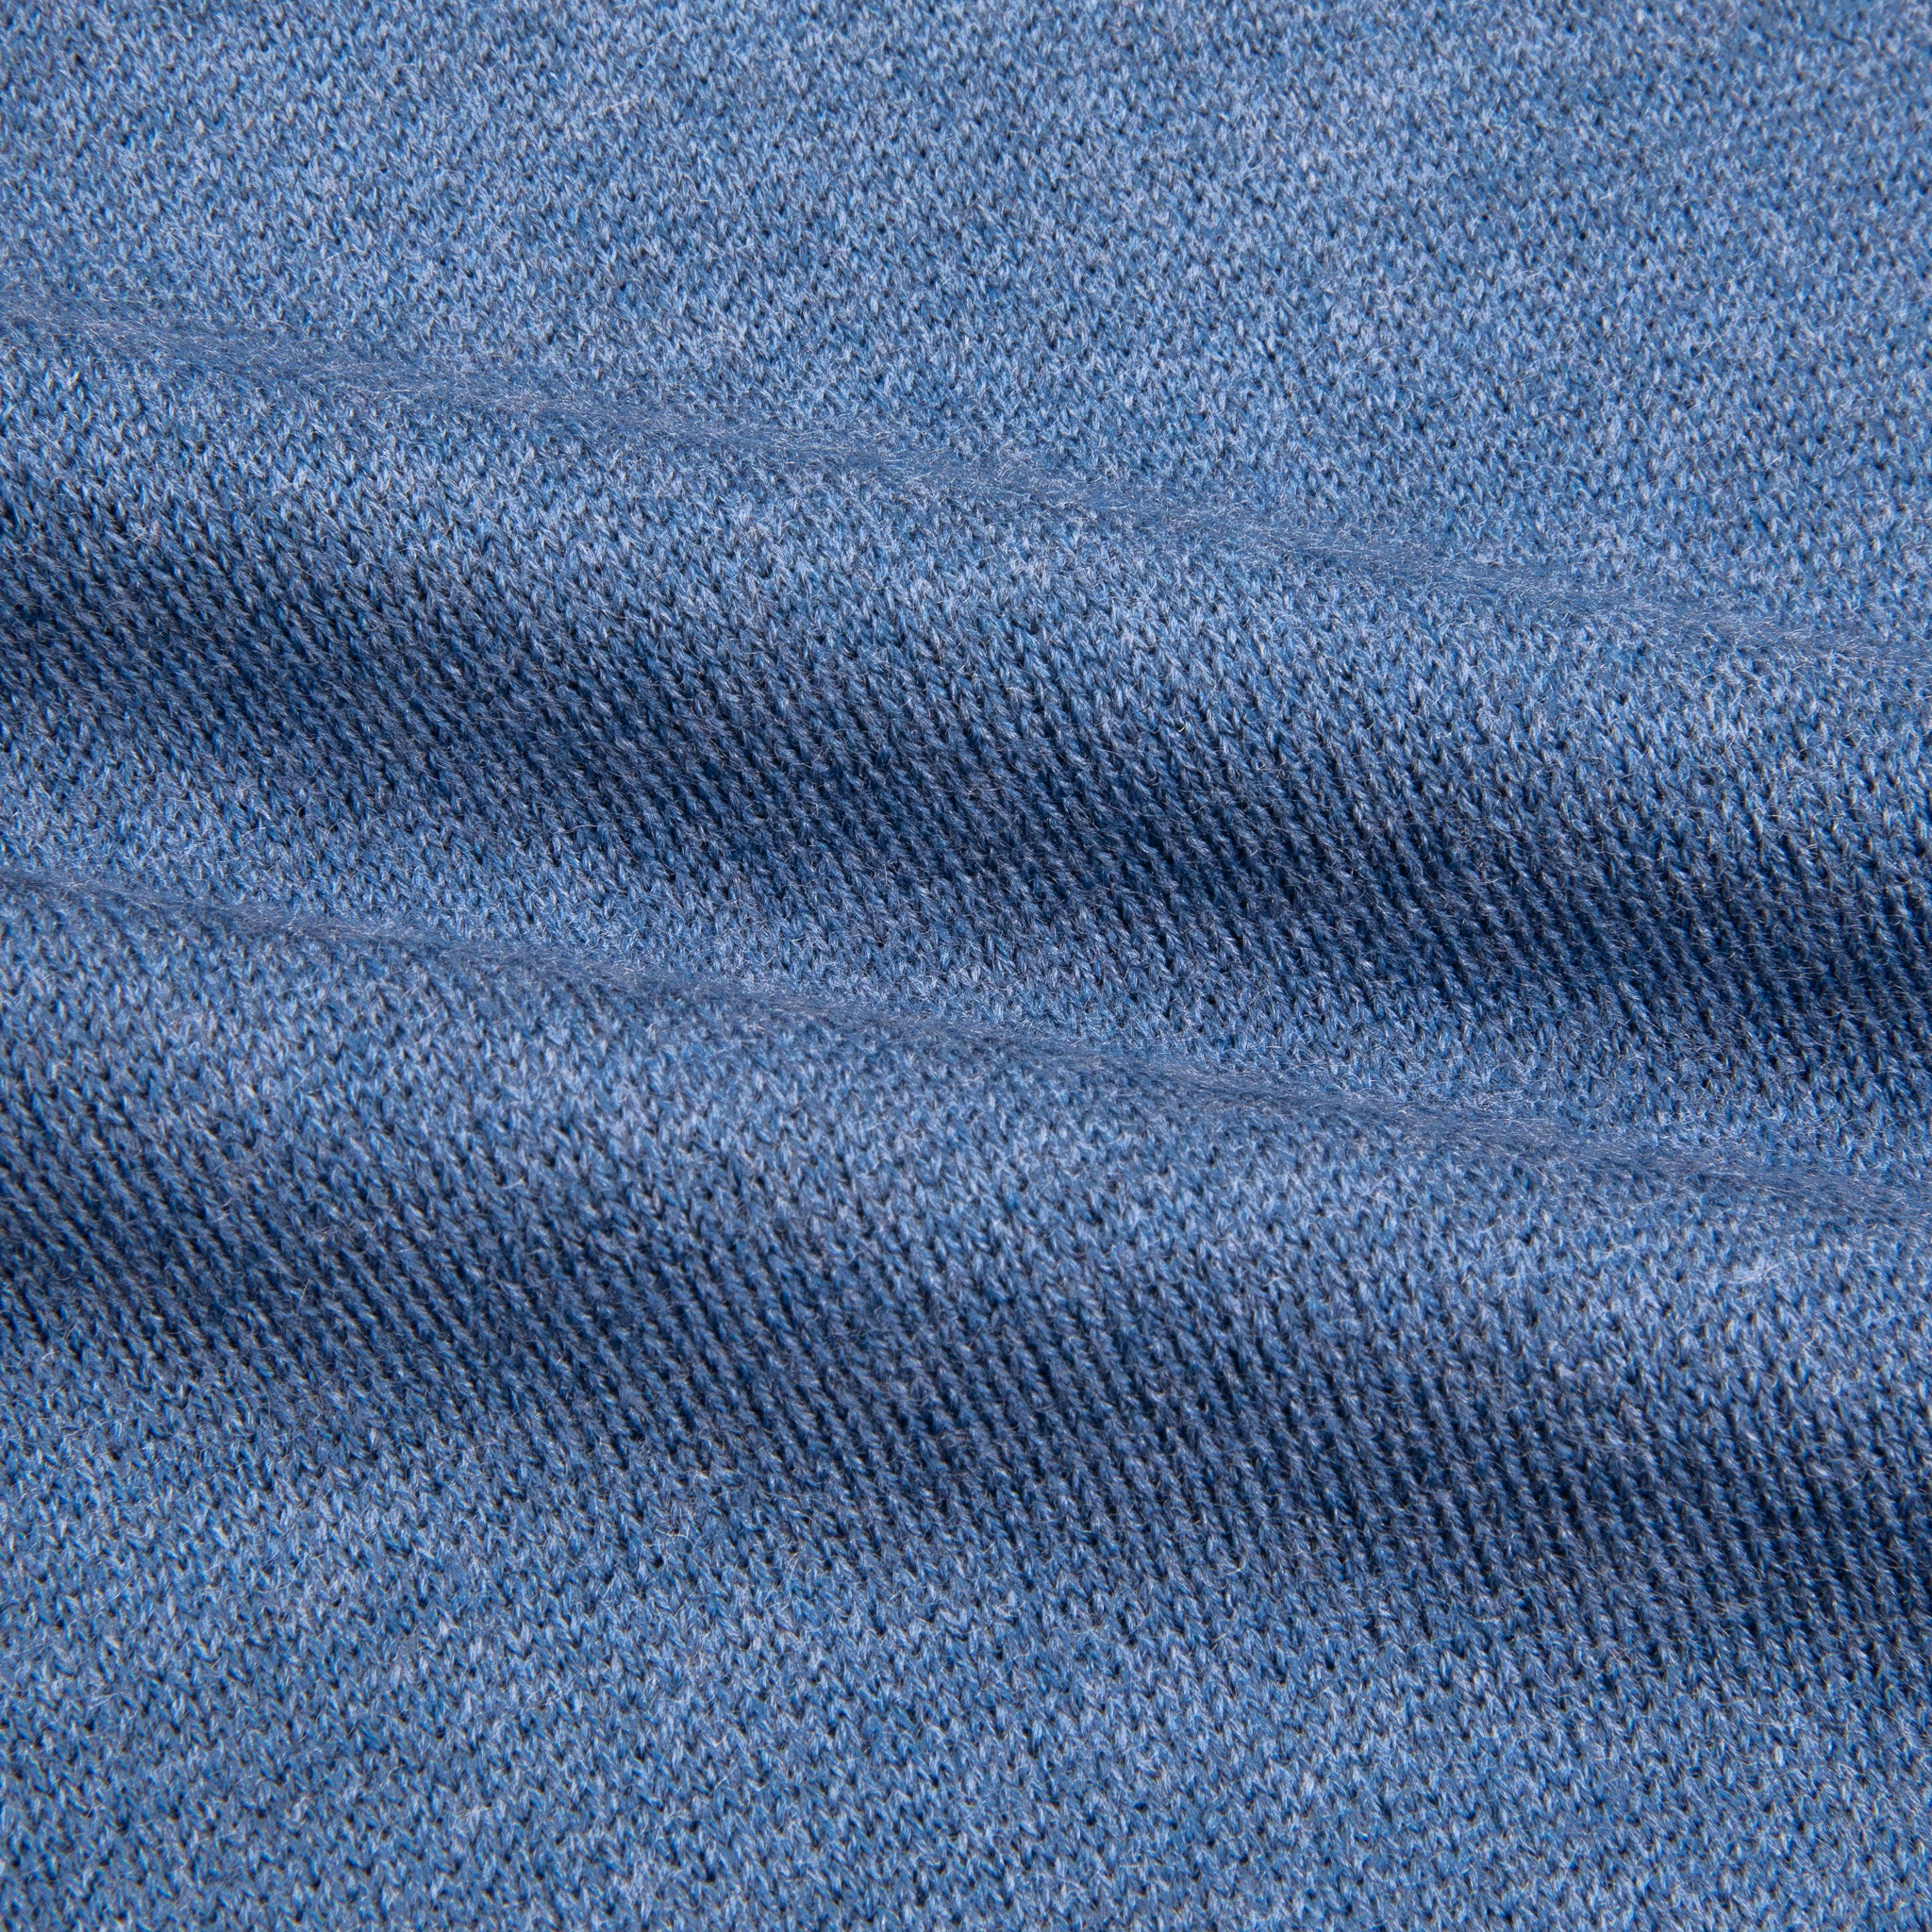 William Lockie Birdseye Solid Merino Wool Polo Denim